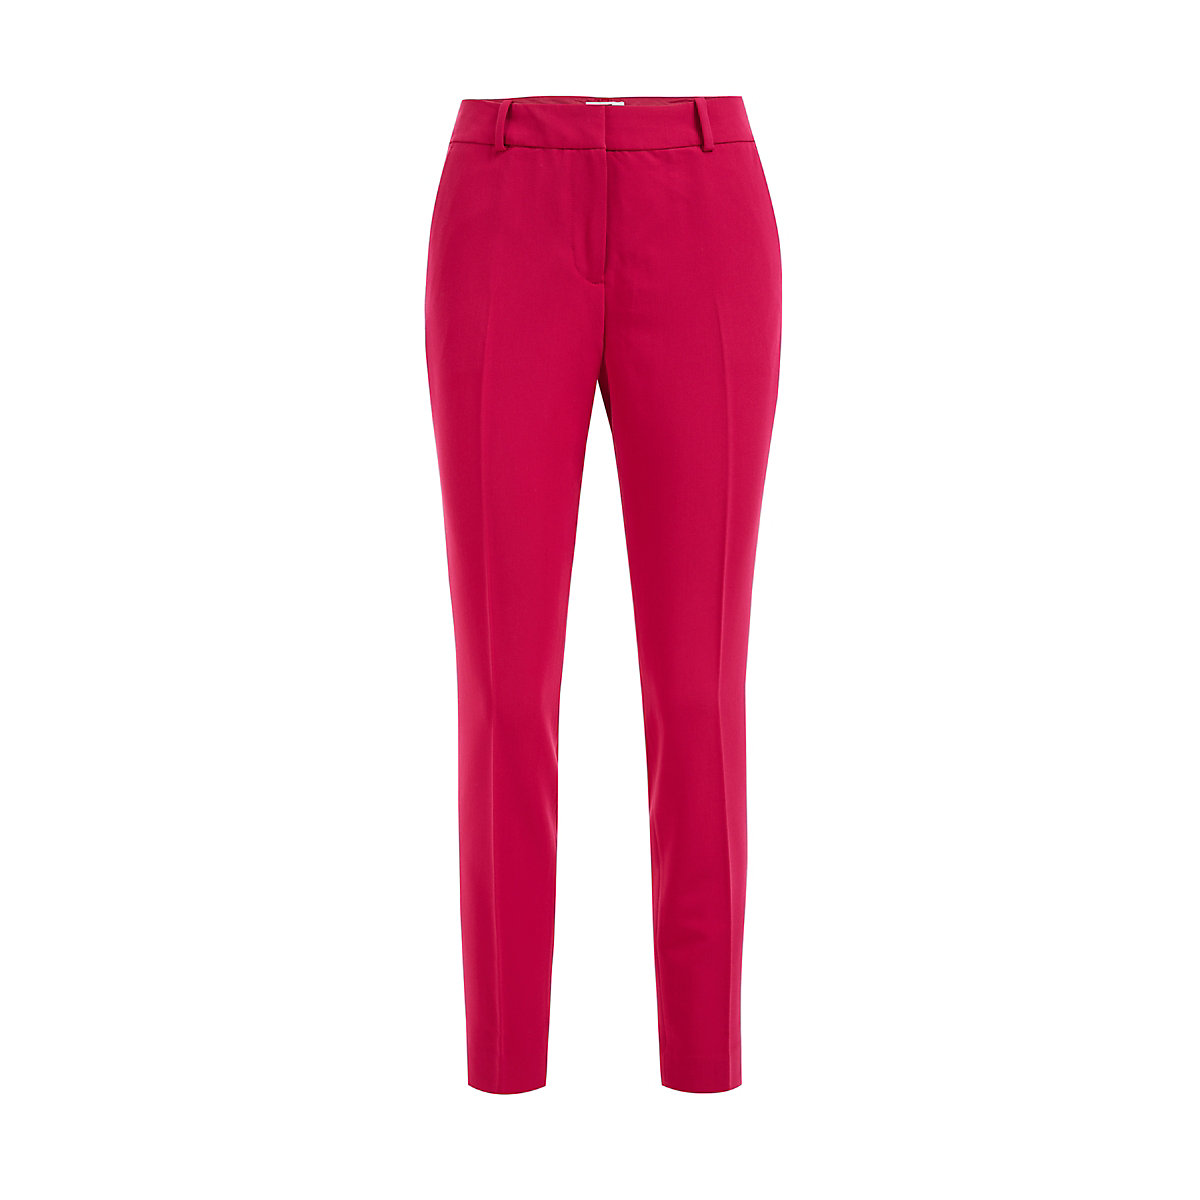 WE Fashion Damen-Slim-Fit-Hose Stoffhosen rosa